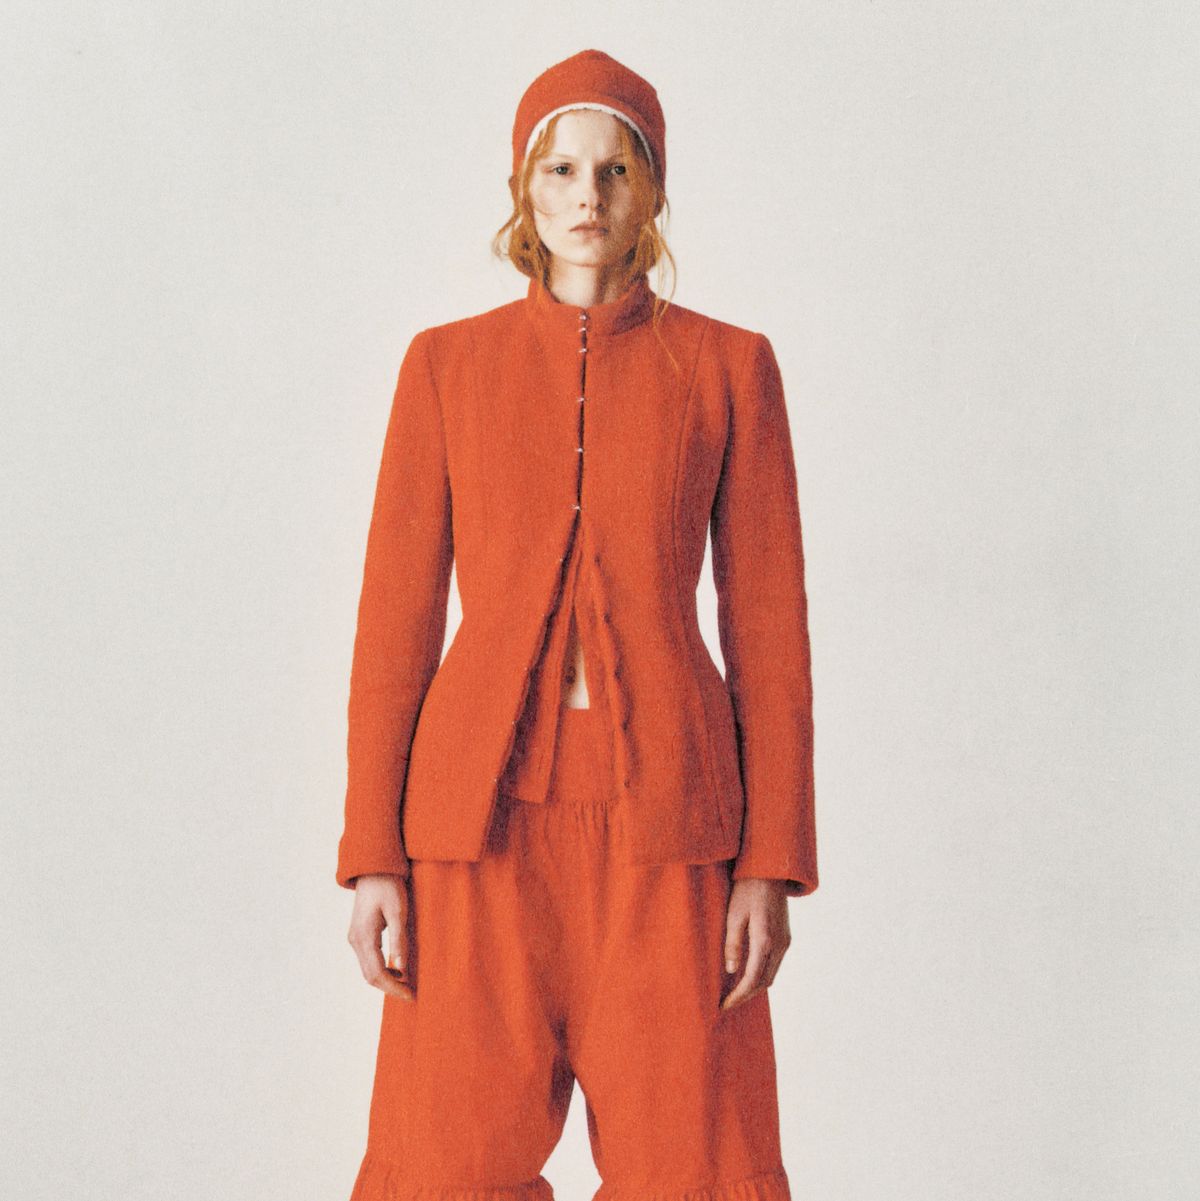 New York Fashion Week: Donna Karan Returns to Her Roots